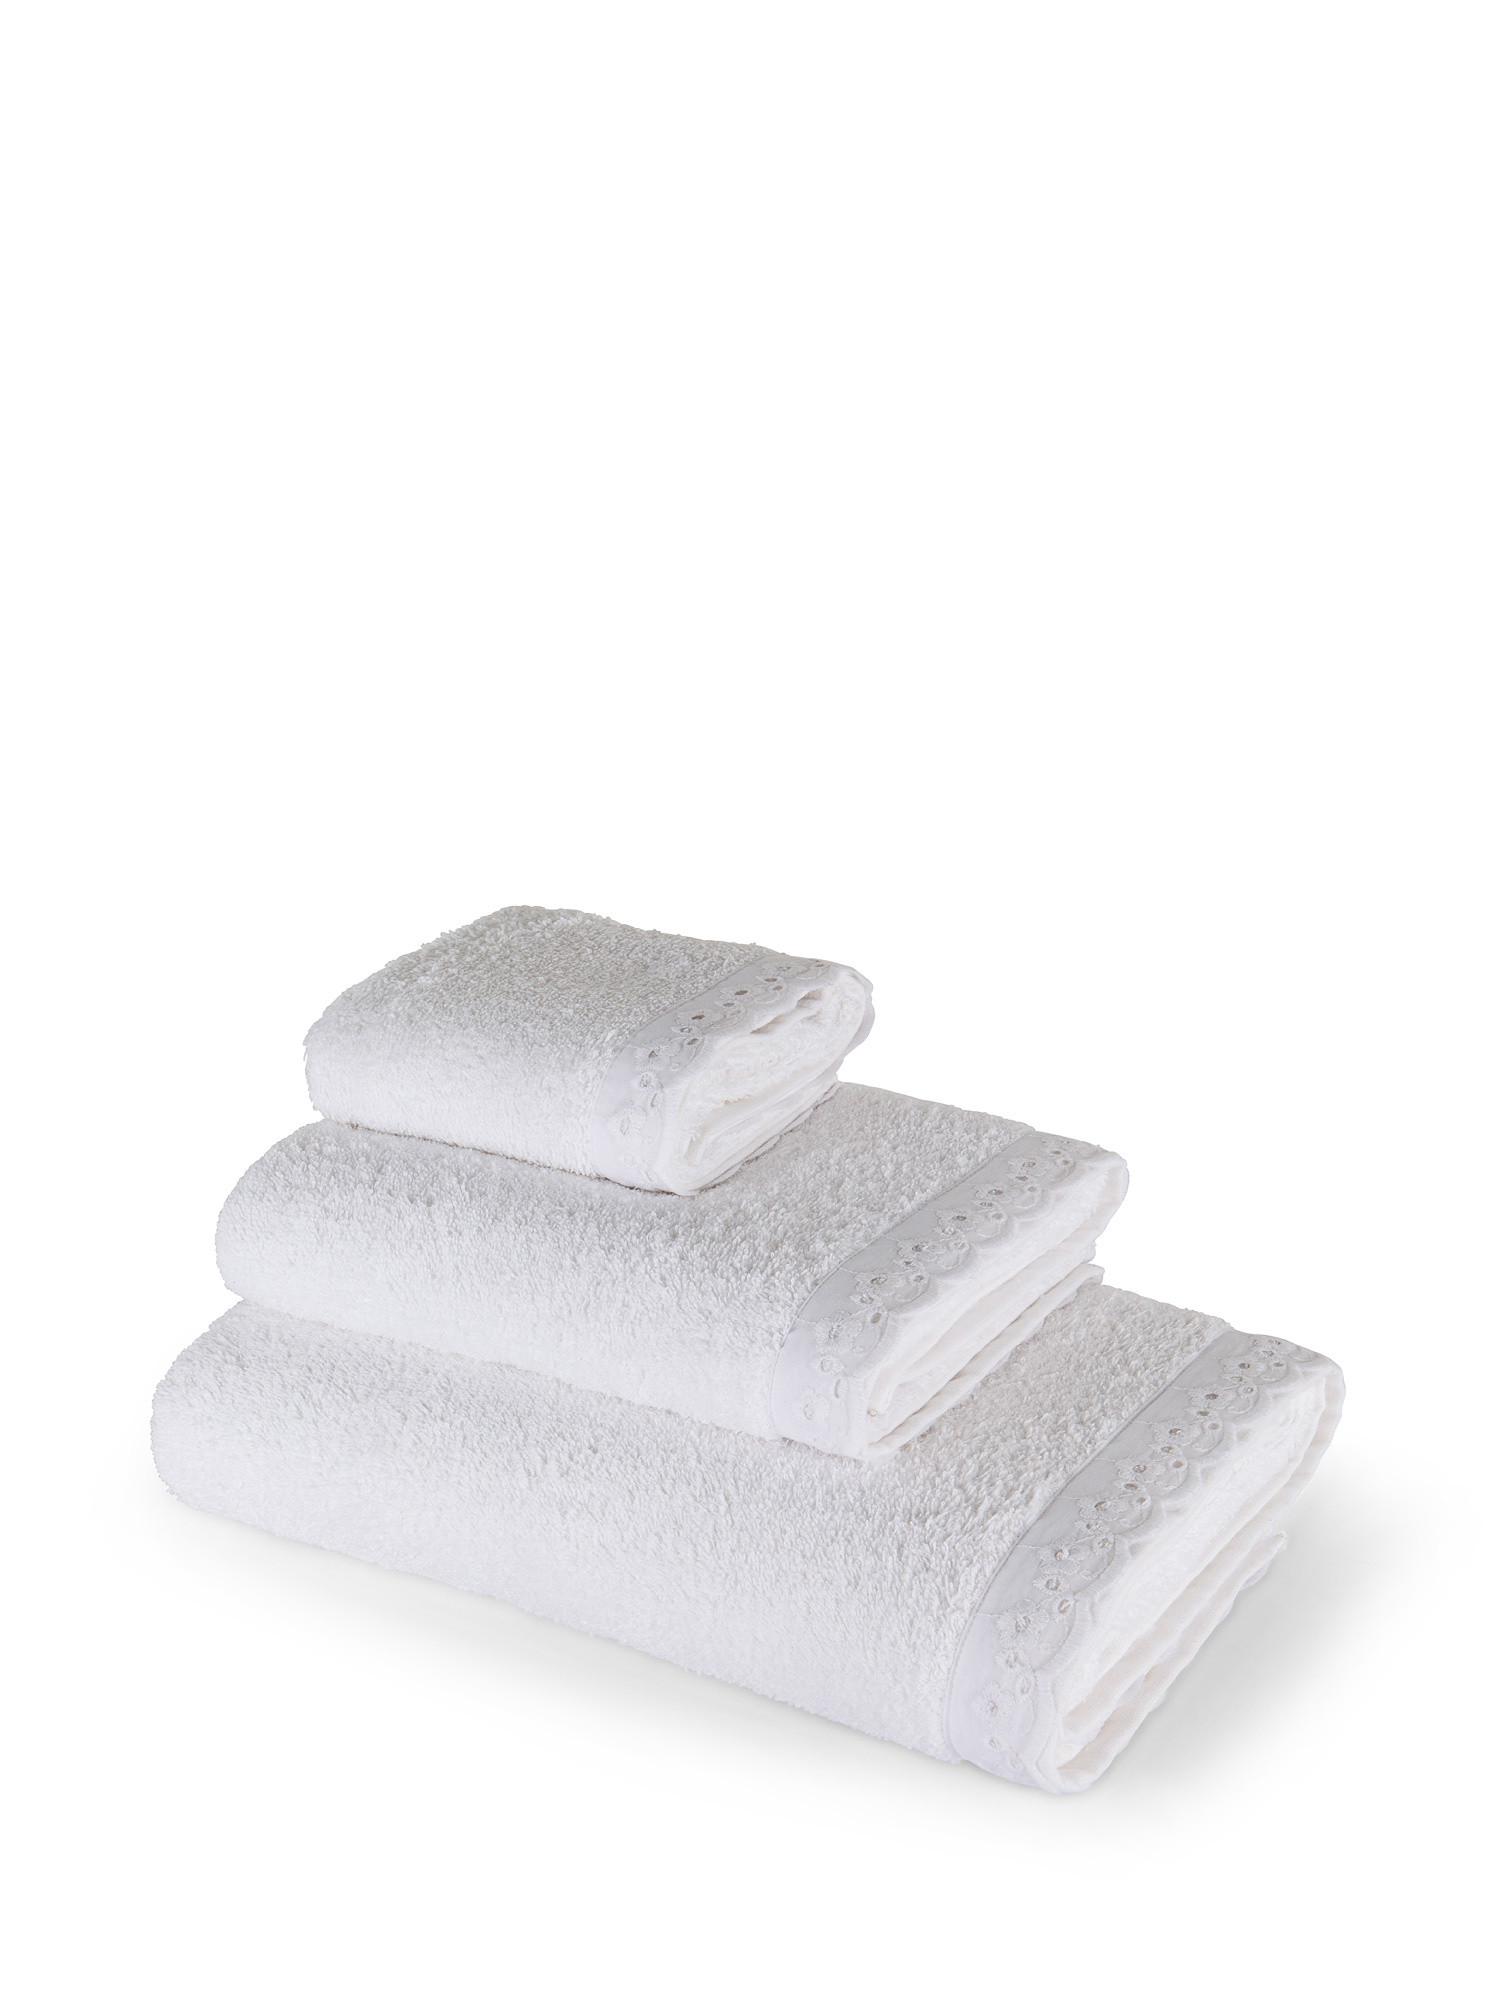 Asciugamano spugna di cotone bordo sangallo, Bianco, large image number 0